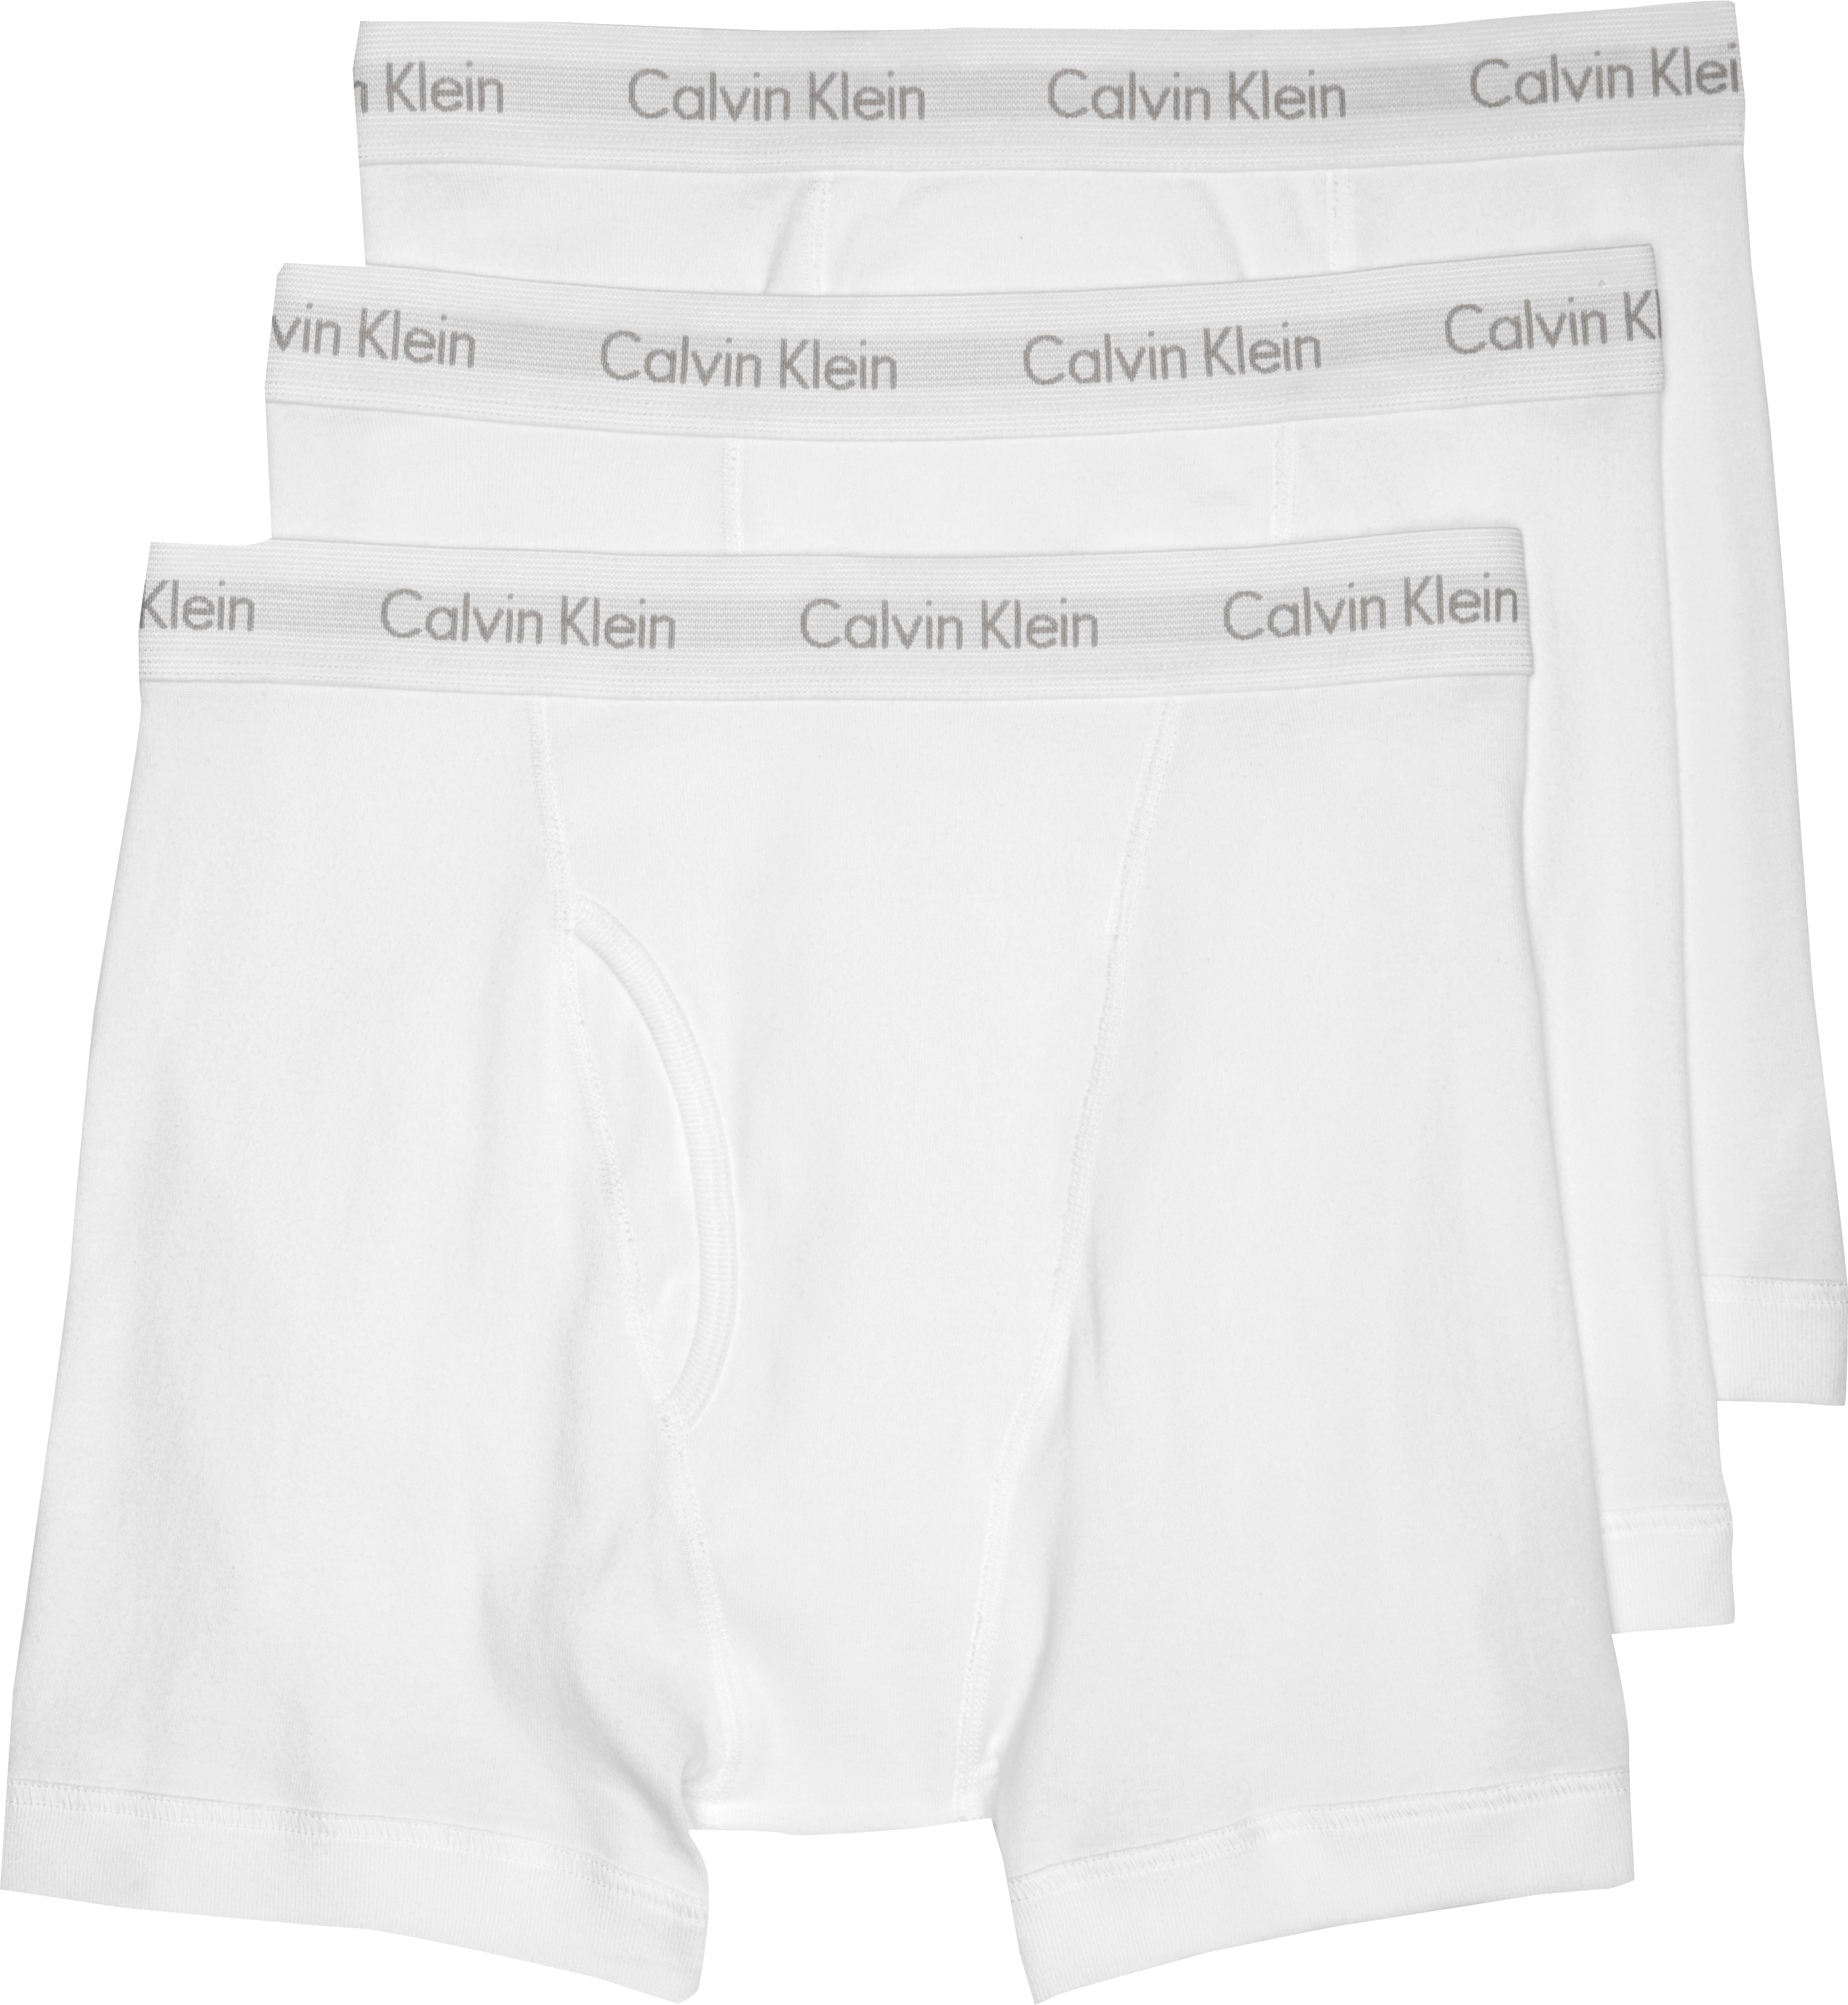 Calvin Klein White Cotton Classic Boxer Briefs, 3-Pack - Men's ...